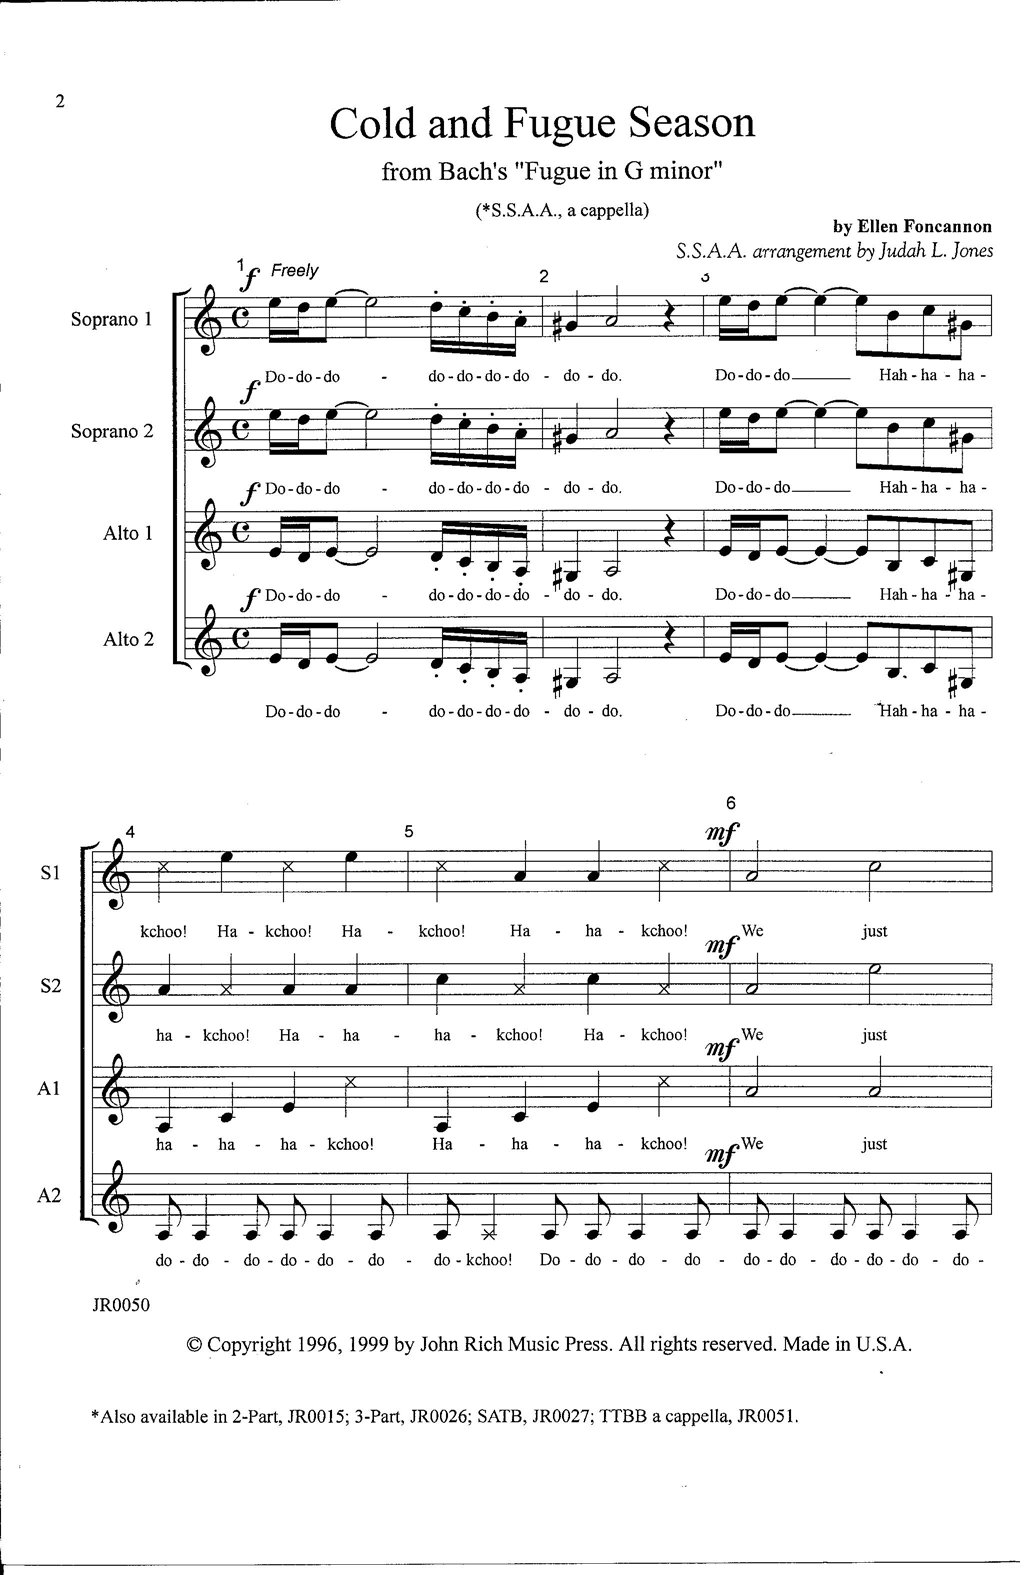 J.S. Bach Cold and Fugue Season (arr. Ellen Foncannon) Sheet Music Notes & Chords for SATB Choir - Download or Print PDF